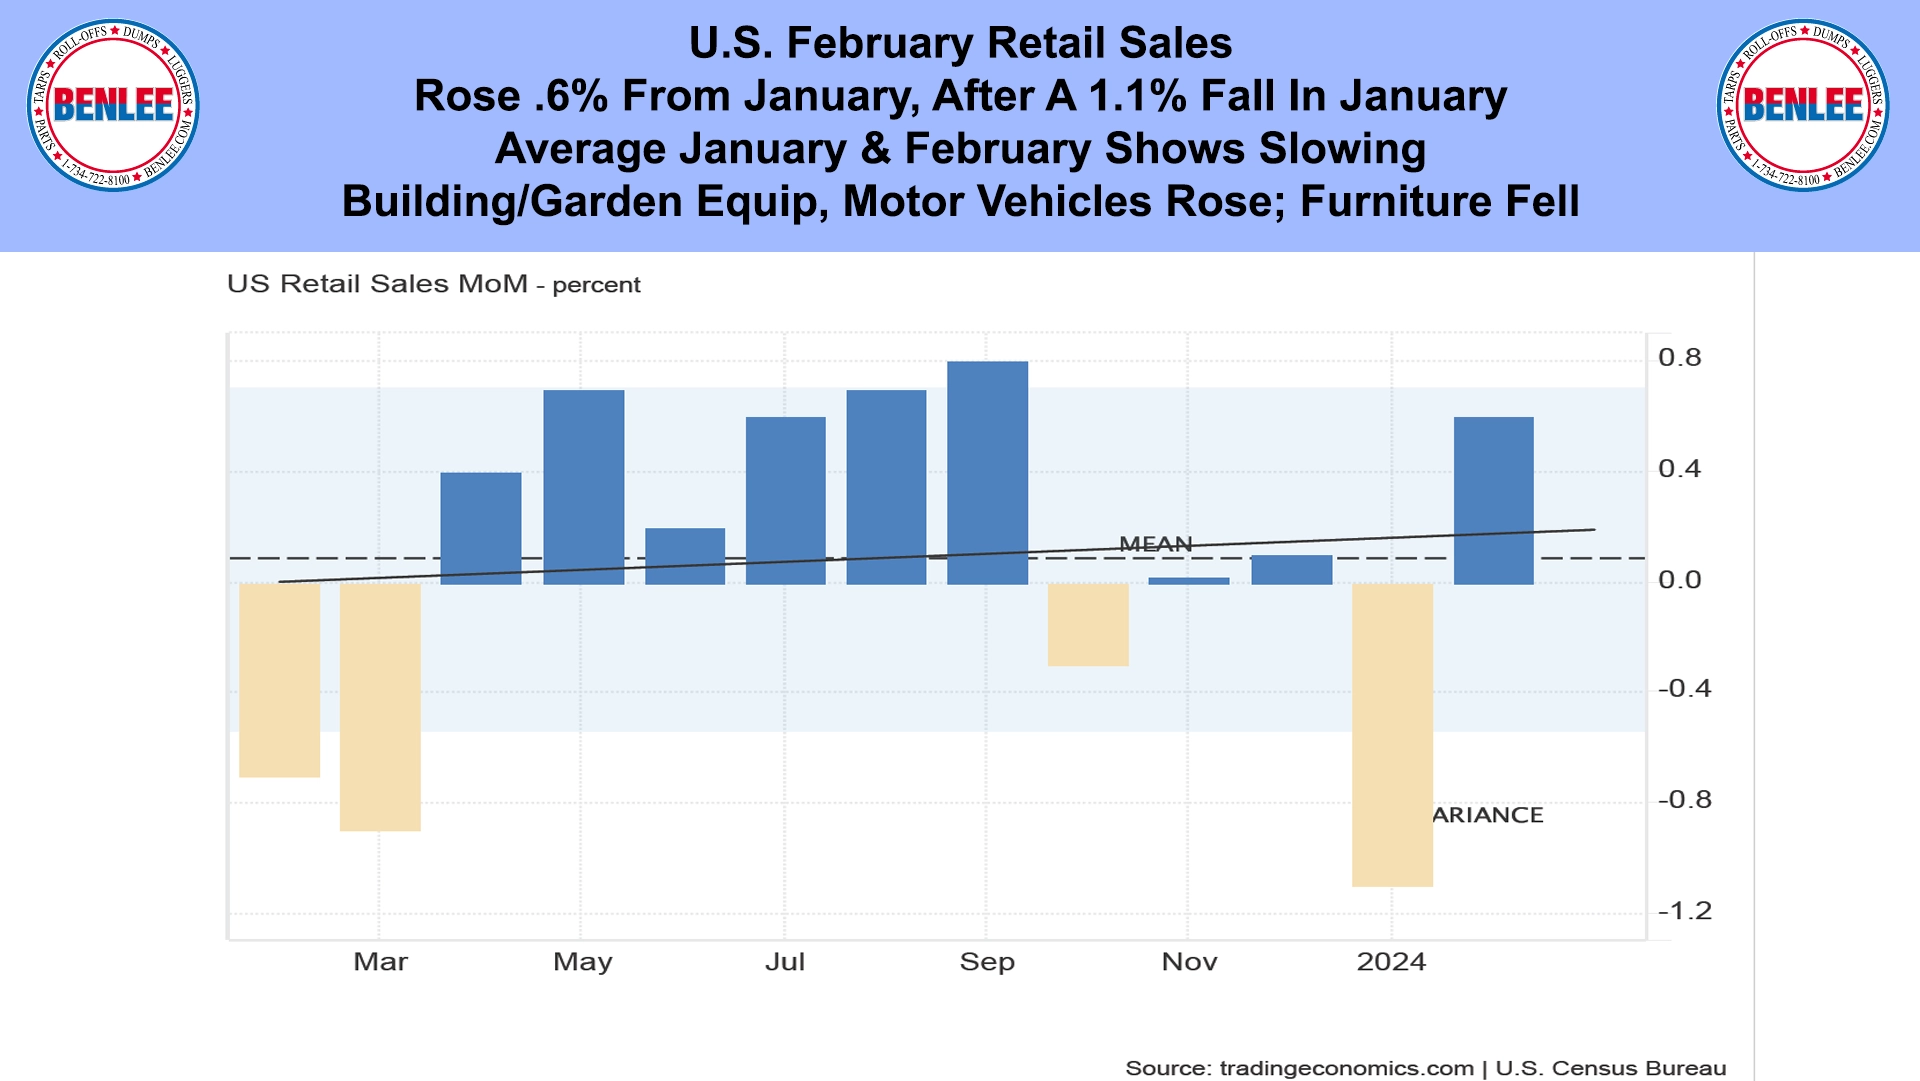 U.S. February Retail Sales